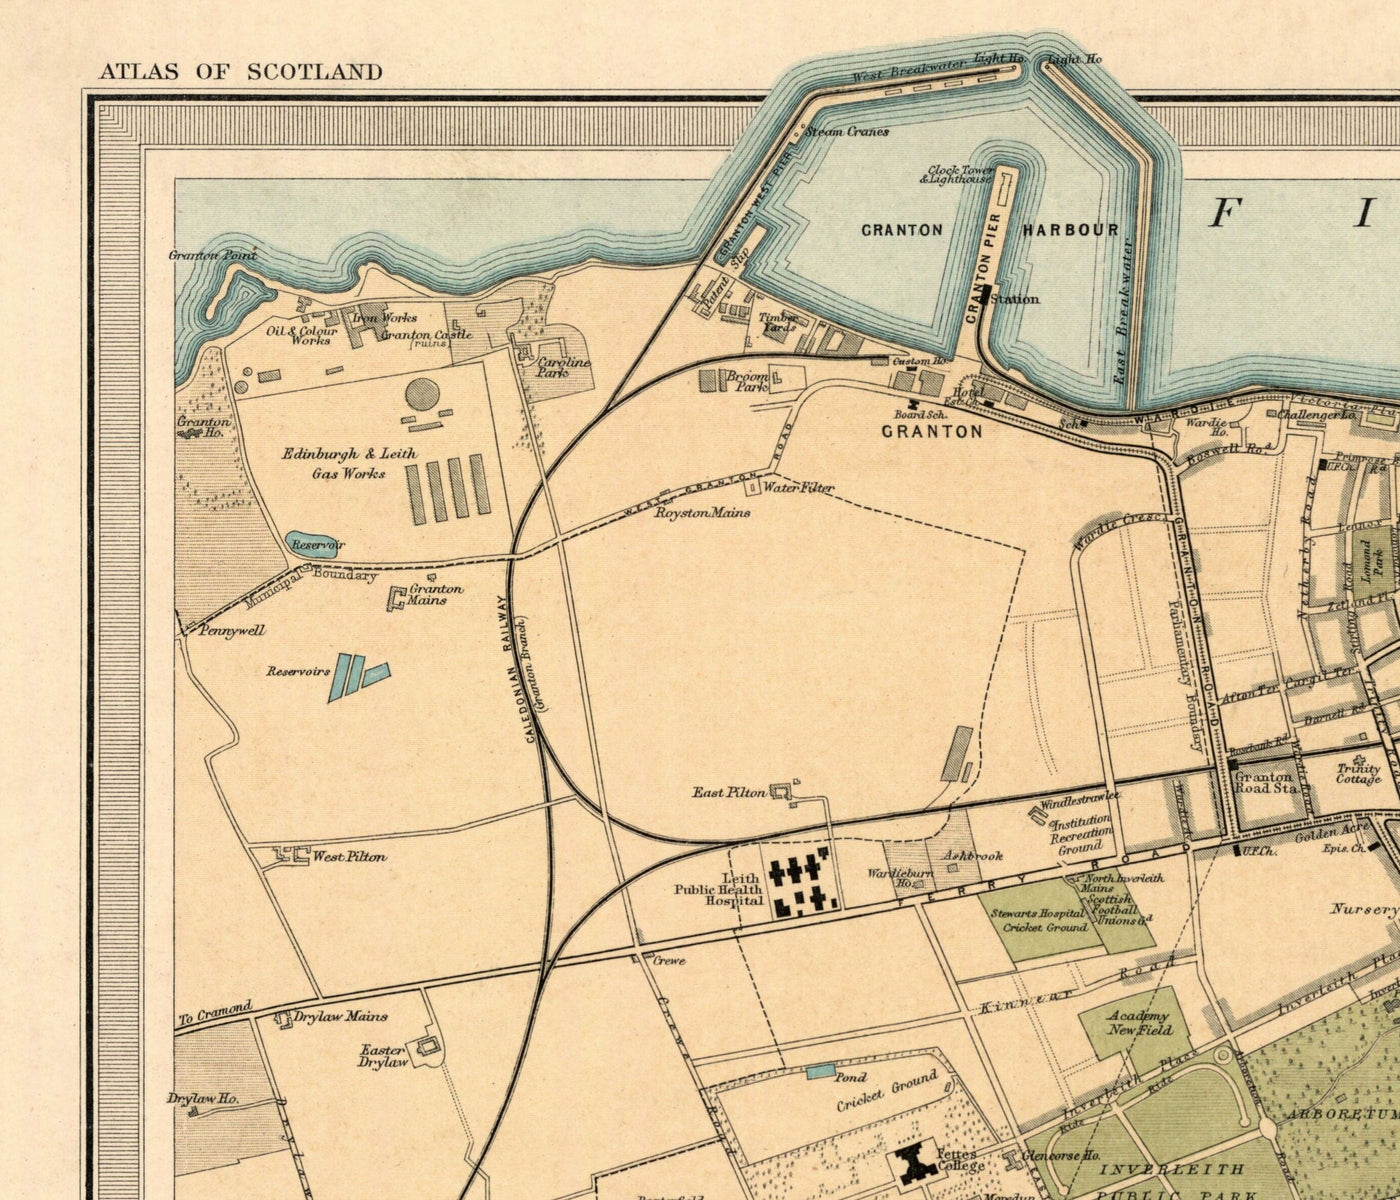 Old Map of Edinburgh in 1912 by J Bartholomew - Leith, Murrayfield, Portobello, Holyrood